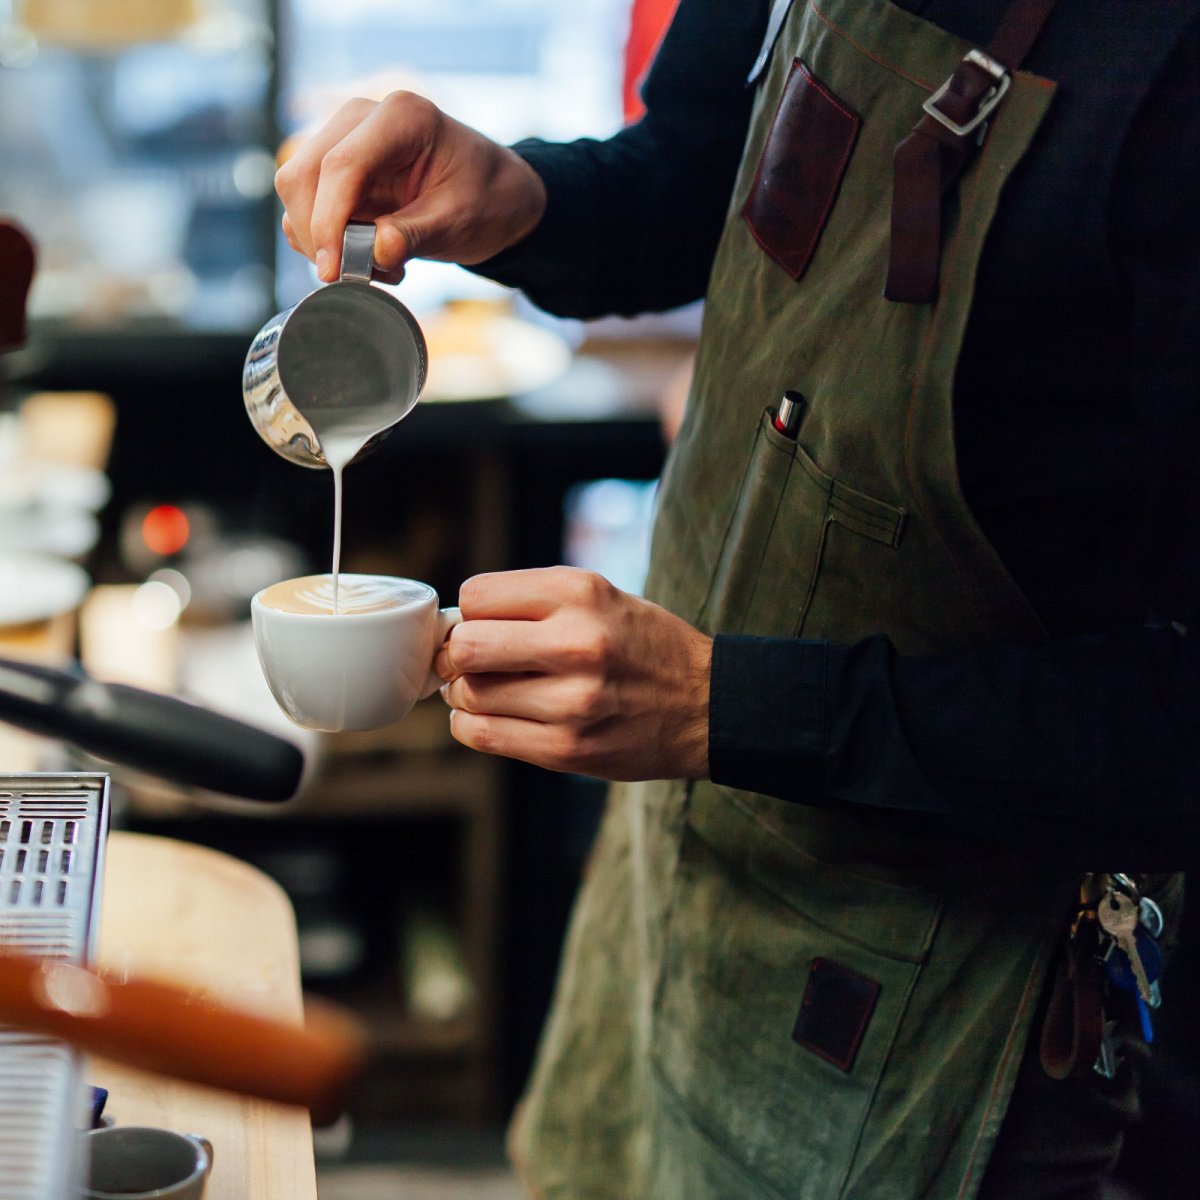 starbucks barista making hot latte in white ceramic mug handcrafted drink